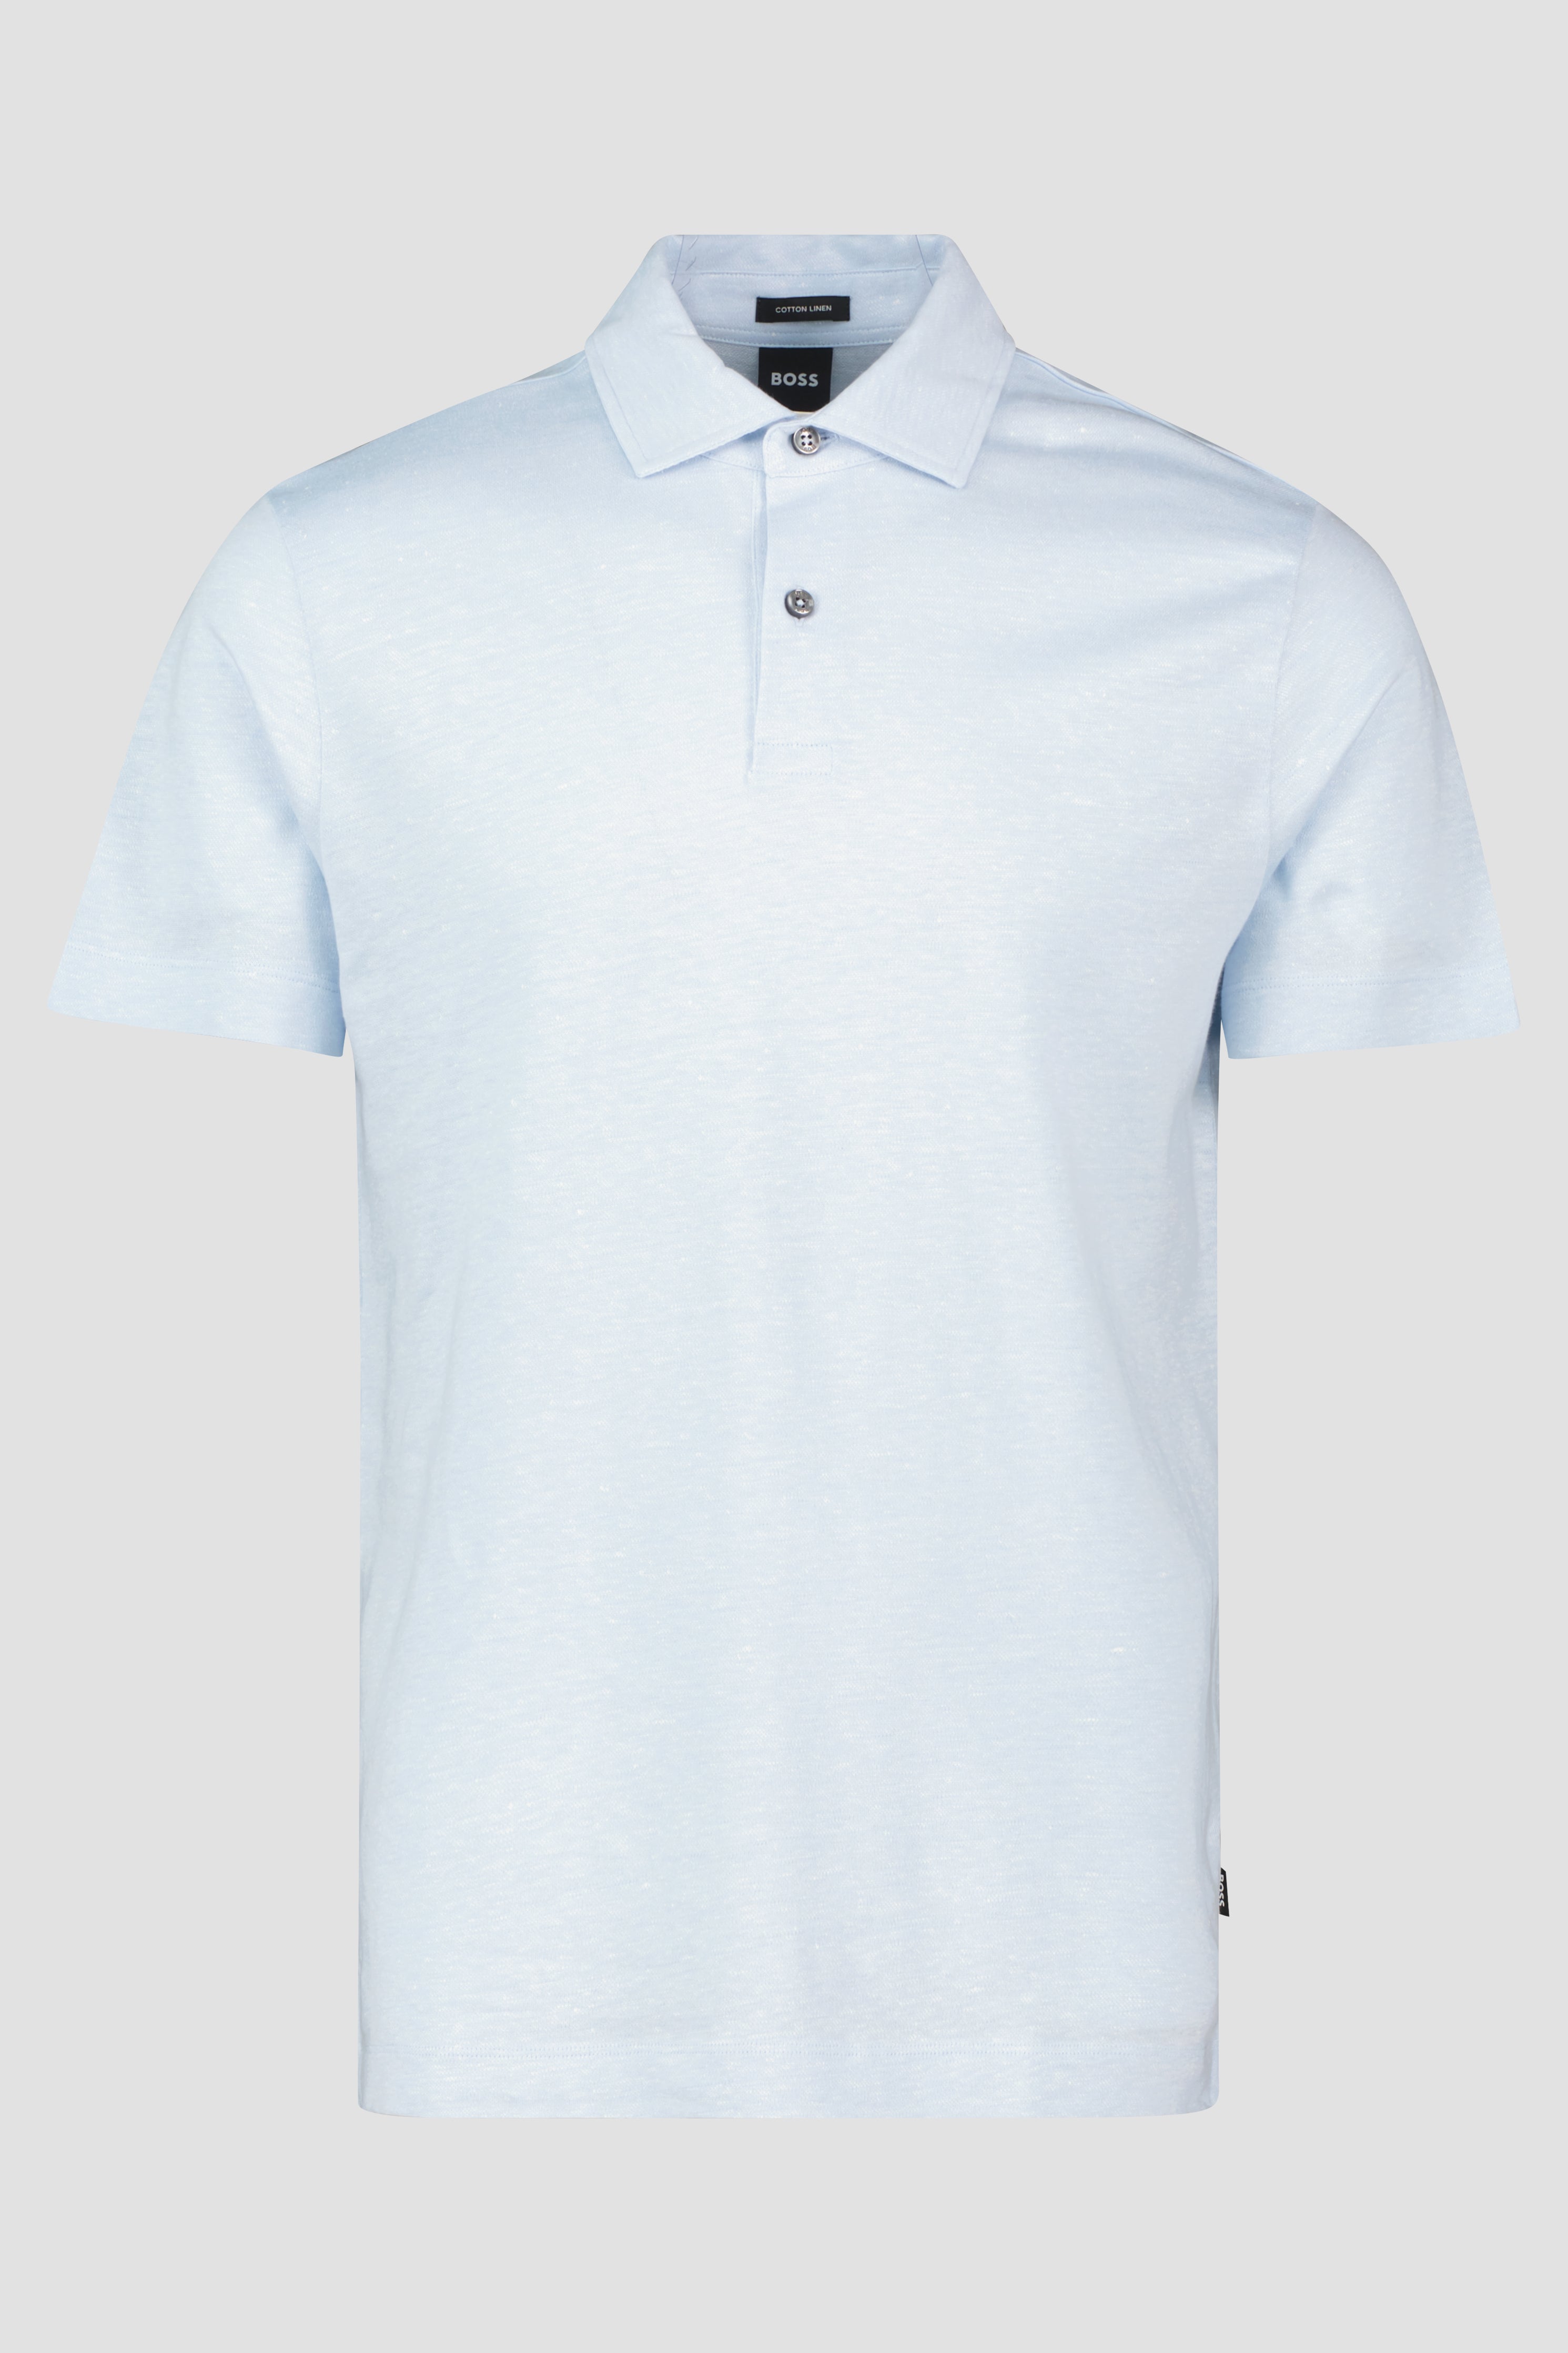 Men's BOSS Black Press 56 Pastel Blue Polo Shirt